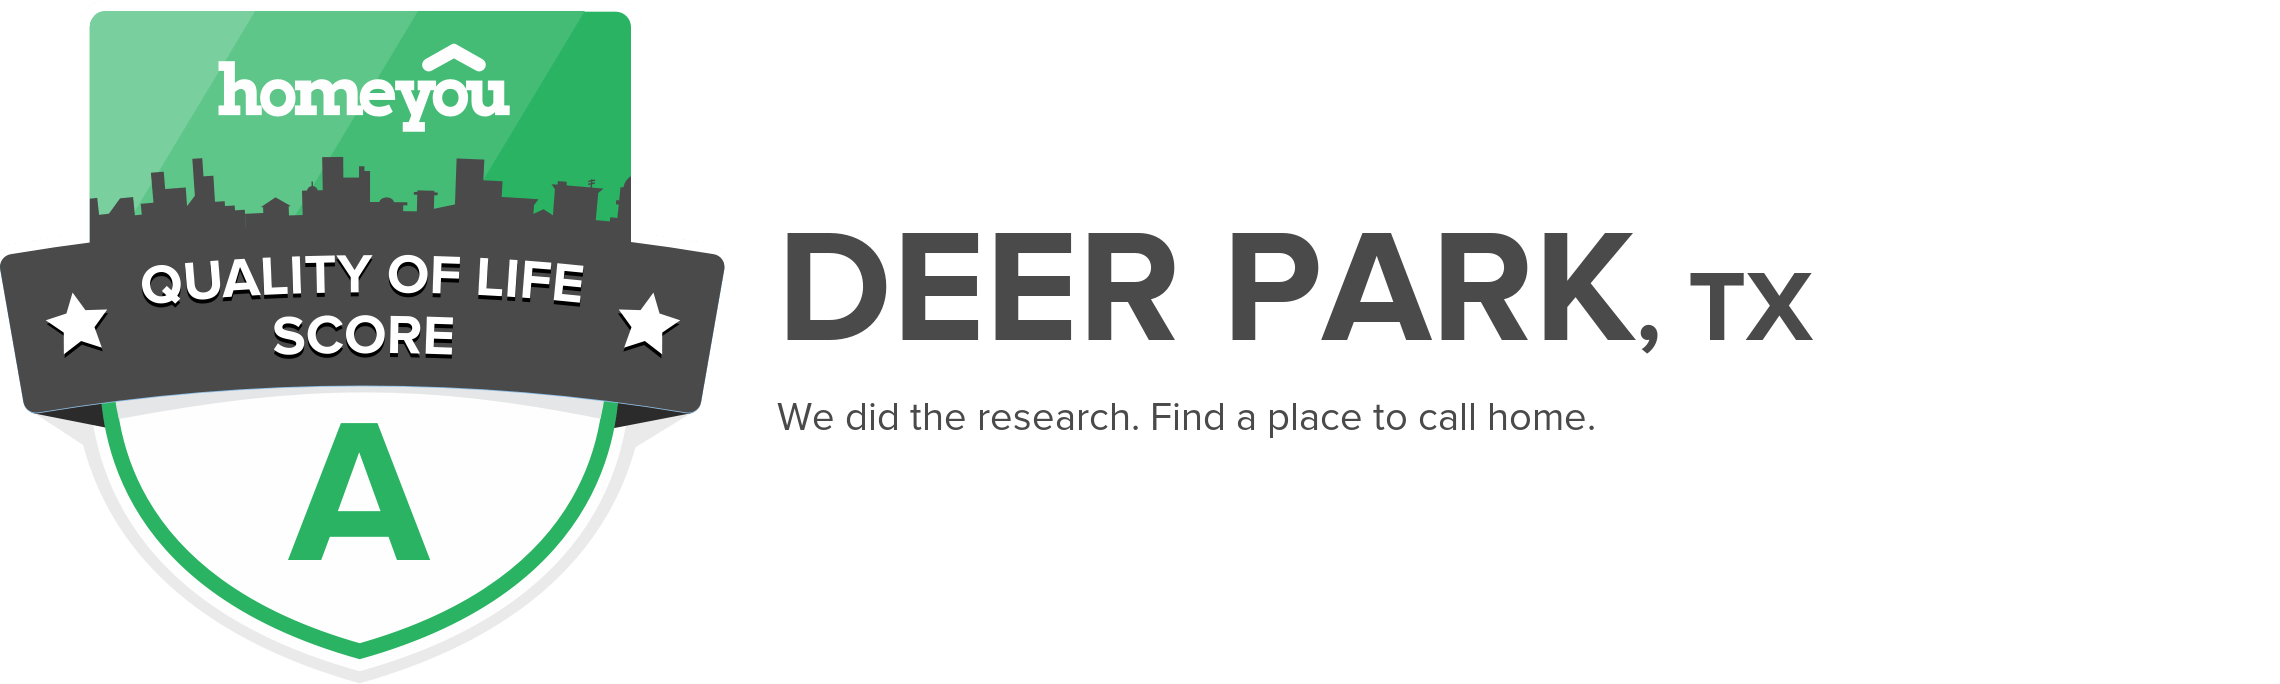 Deer Park, TX